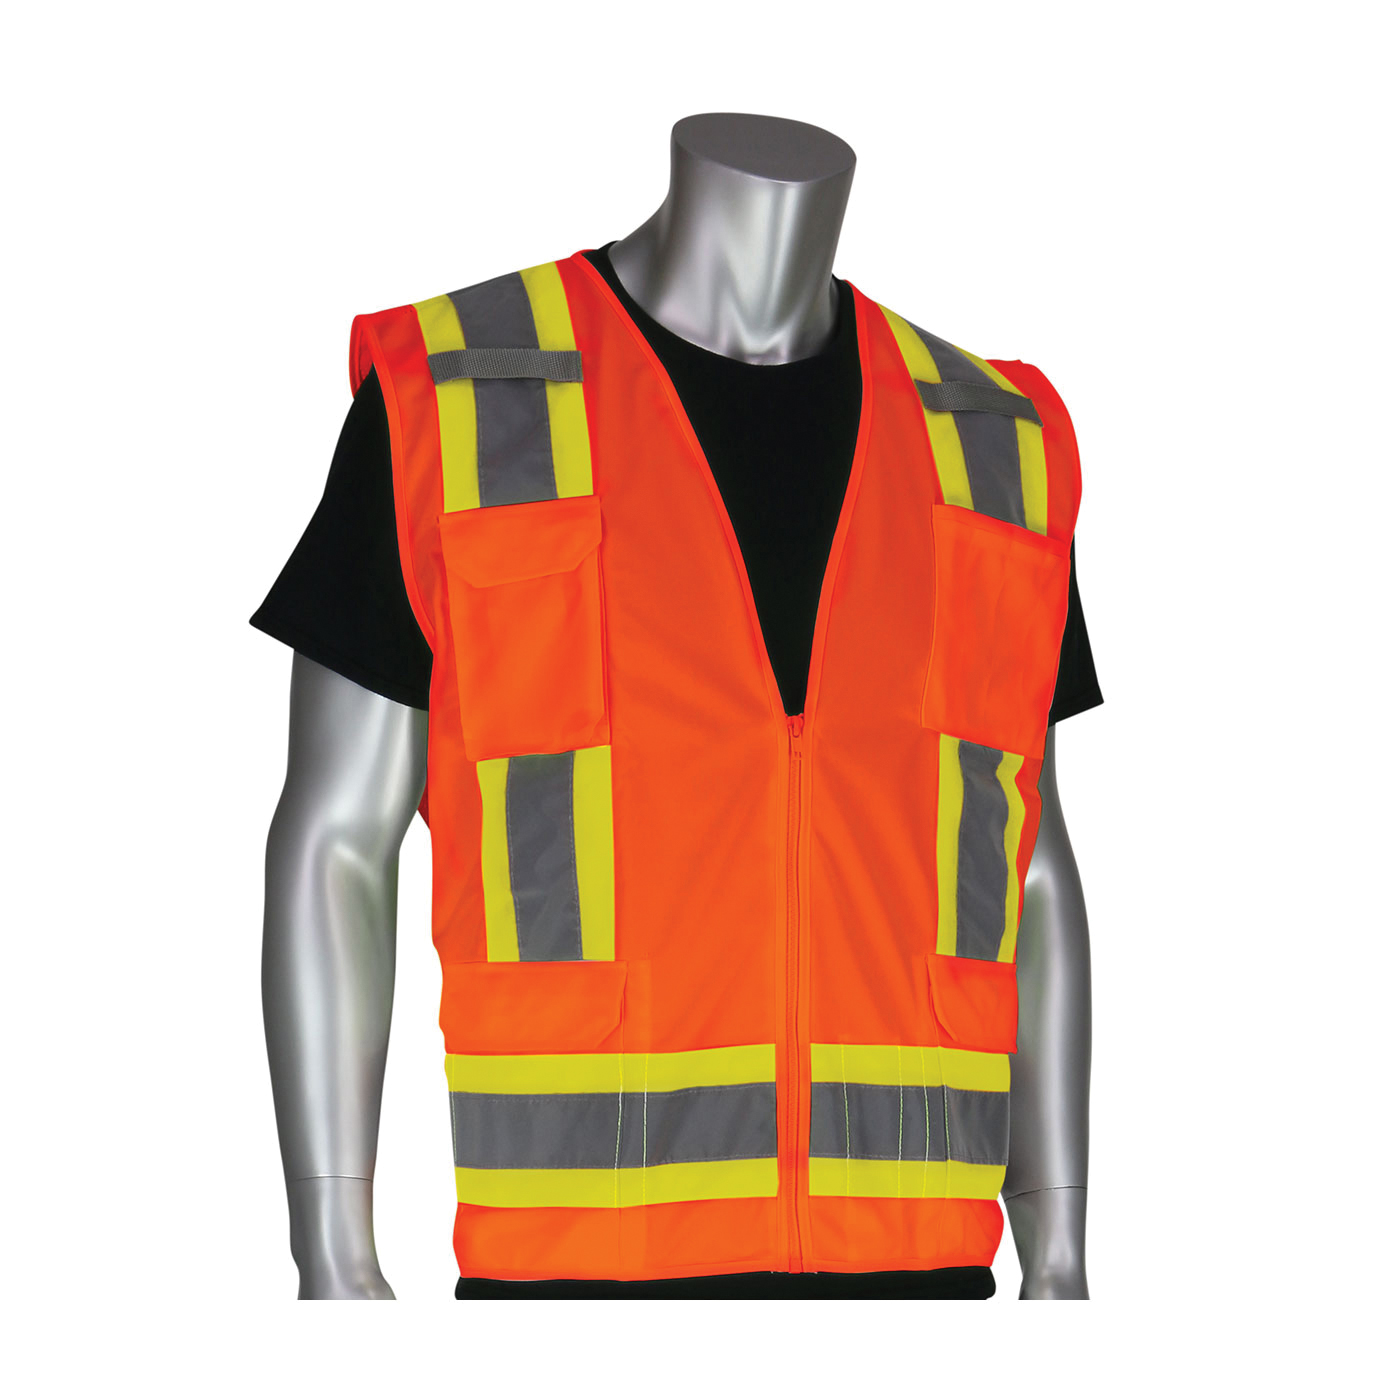 PIP® 302-0500S-ORG/M 2-Tone Surveyor Safety Vest, M, Hi-Viz Orange, Polyester/Solid Tricot, Zipper Closure, 11 Pockets, ANSI Class: Class 2, Specifications Met: ANSI 107 Type R